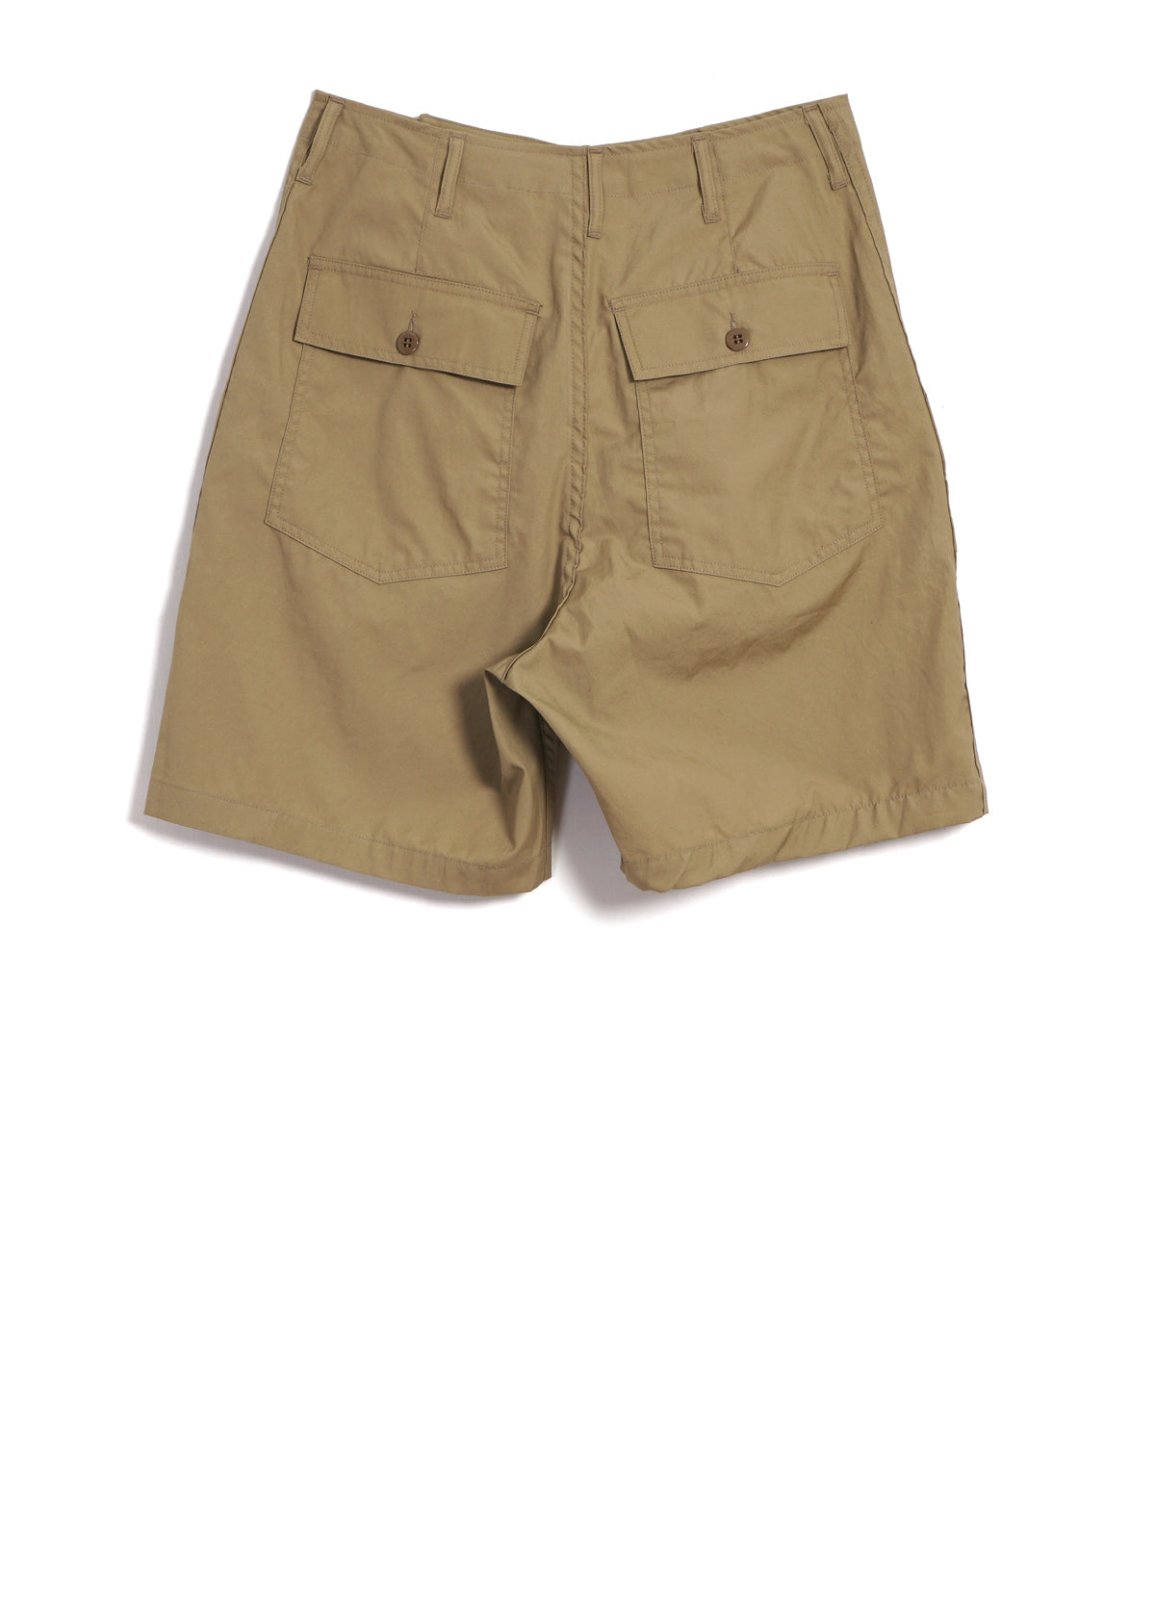 FATIGUE SHORTS | Large Patch Pocket Shorts | Khaki | HANSEN Garments